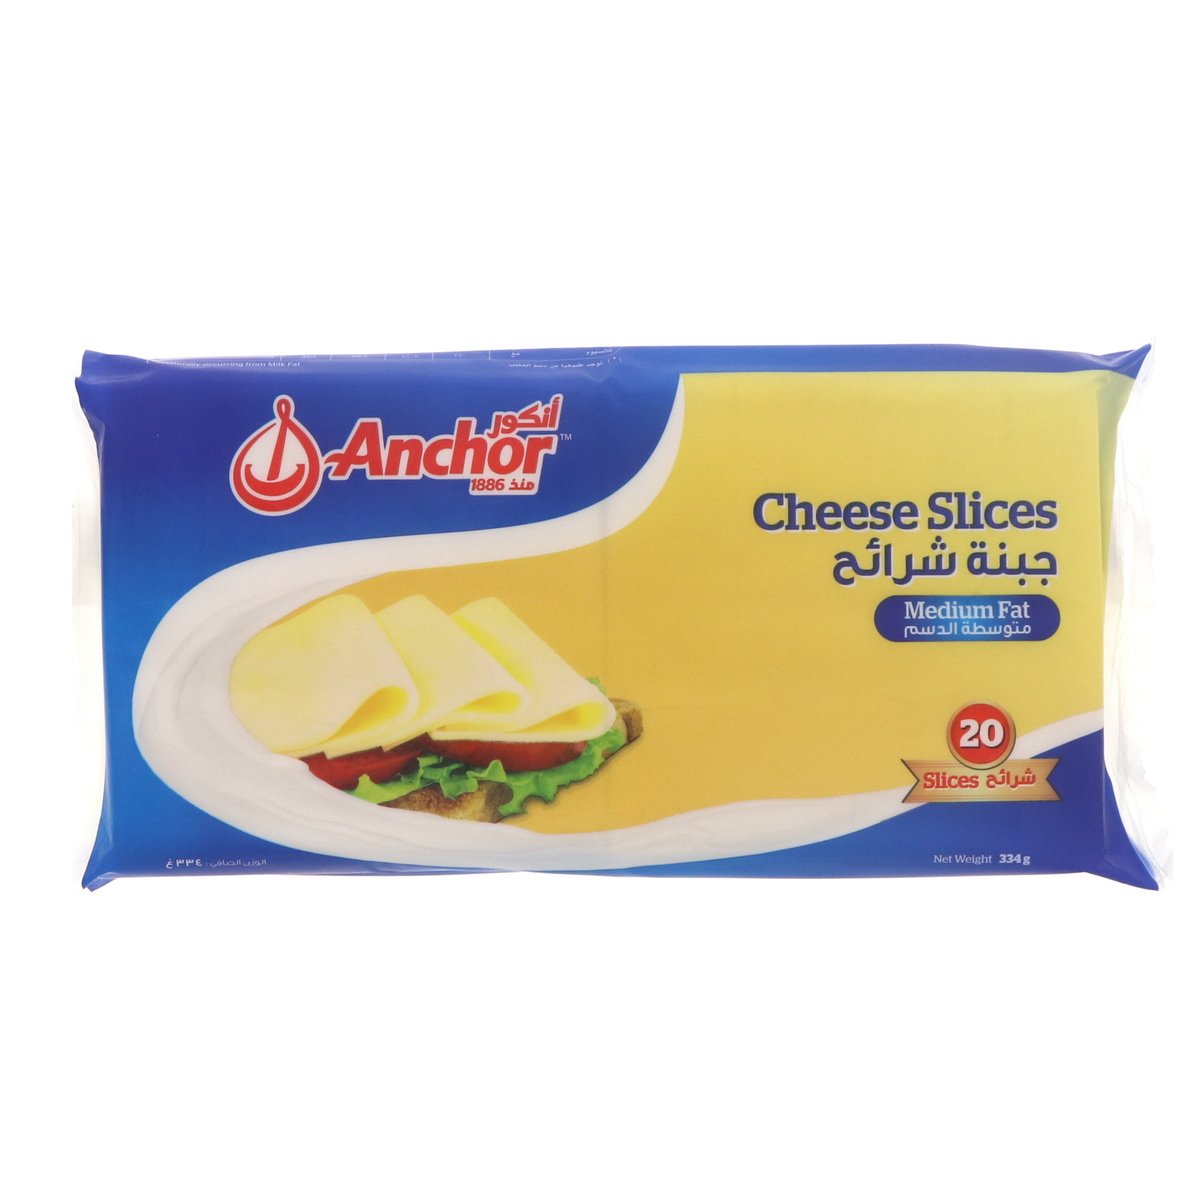 Anchor Cheese Slices Medium Fat 334 g